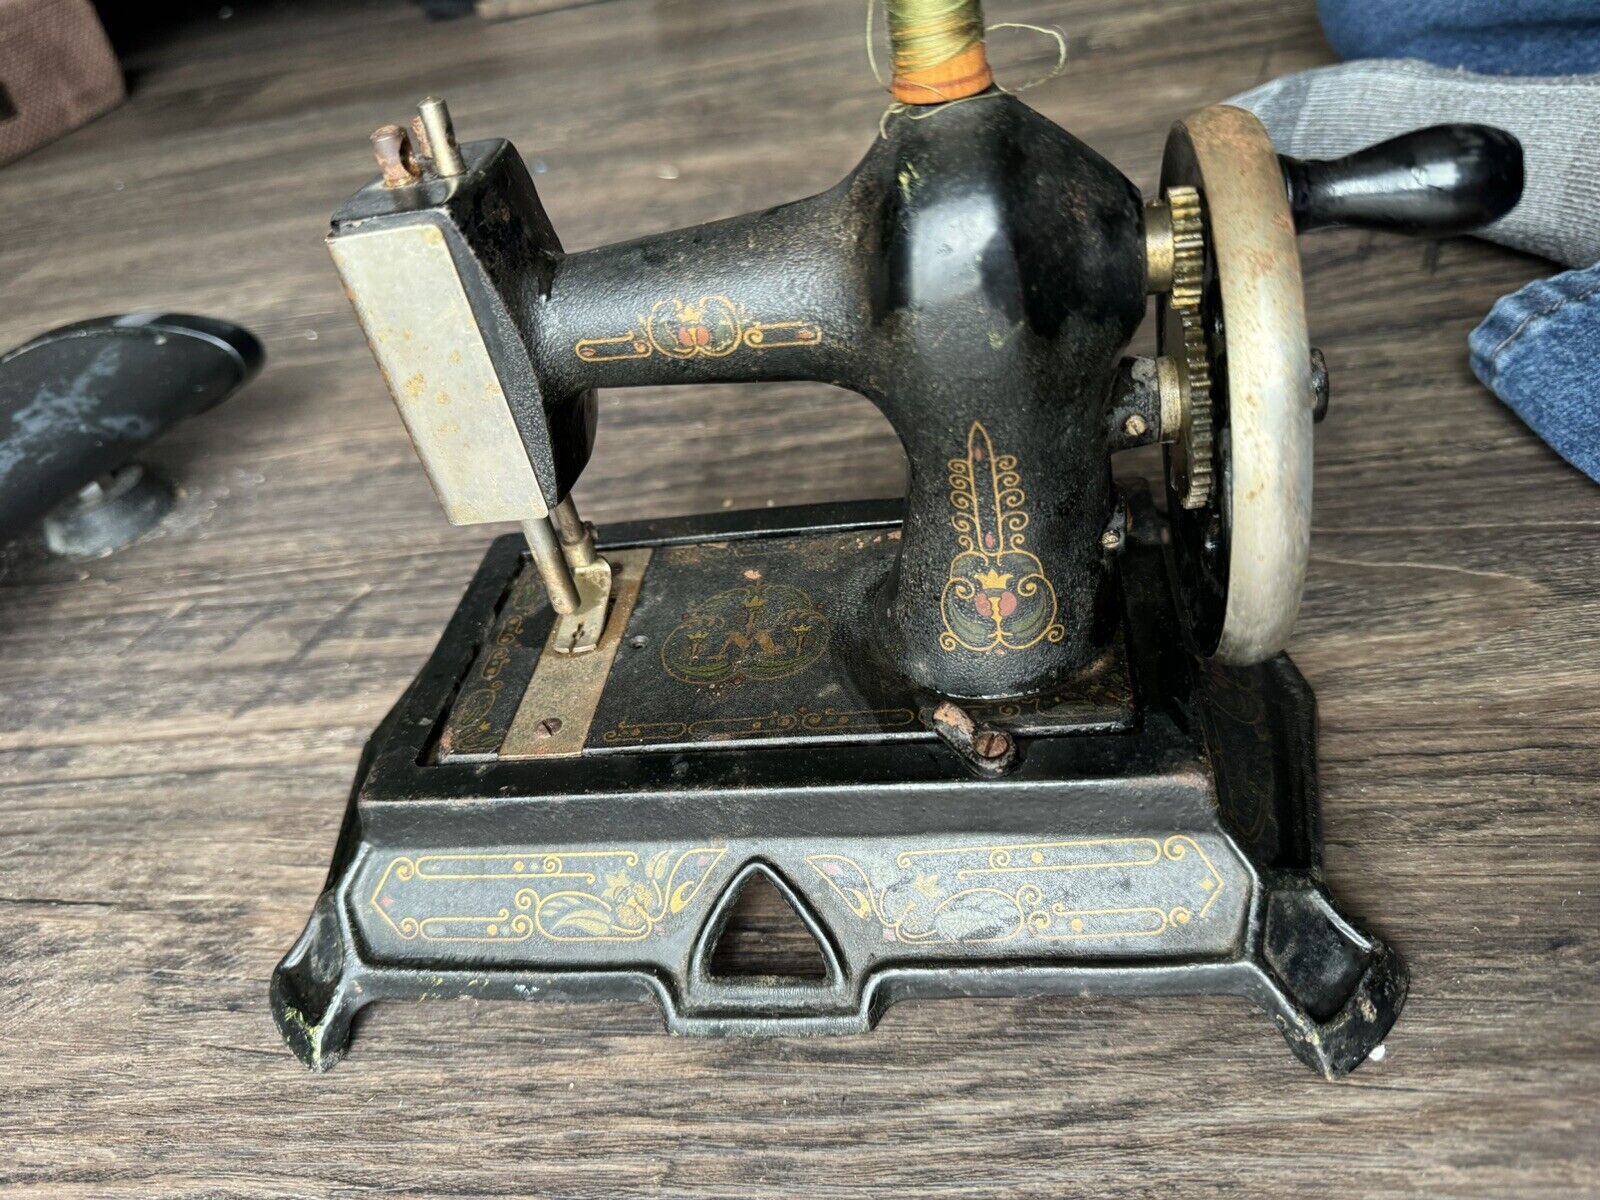 Superb Antique Muller No 29/19 Childs / Toy Sewing Machine c1910 Working